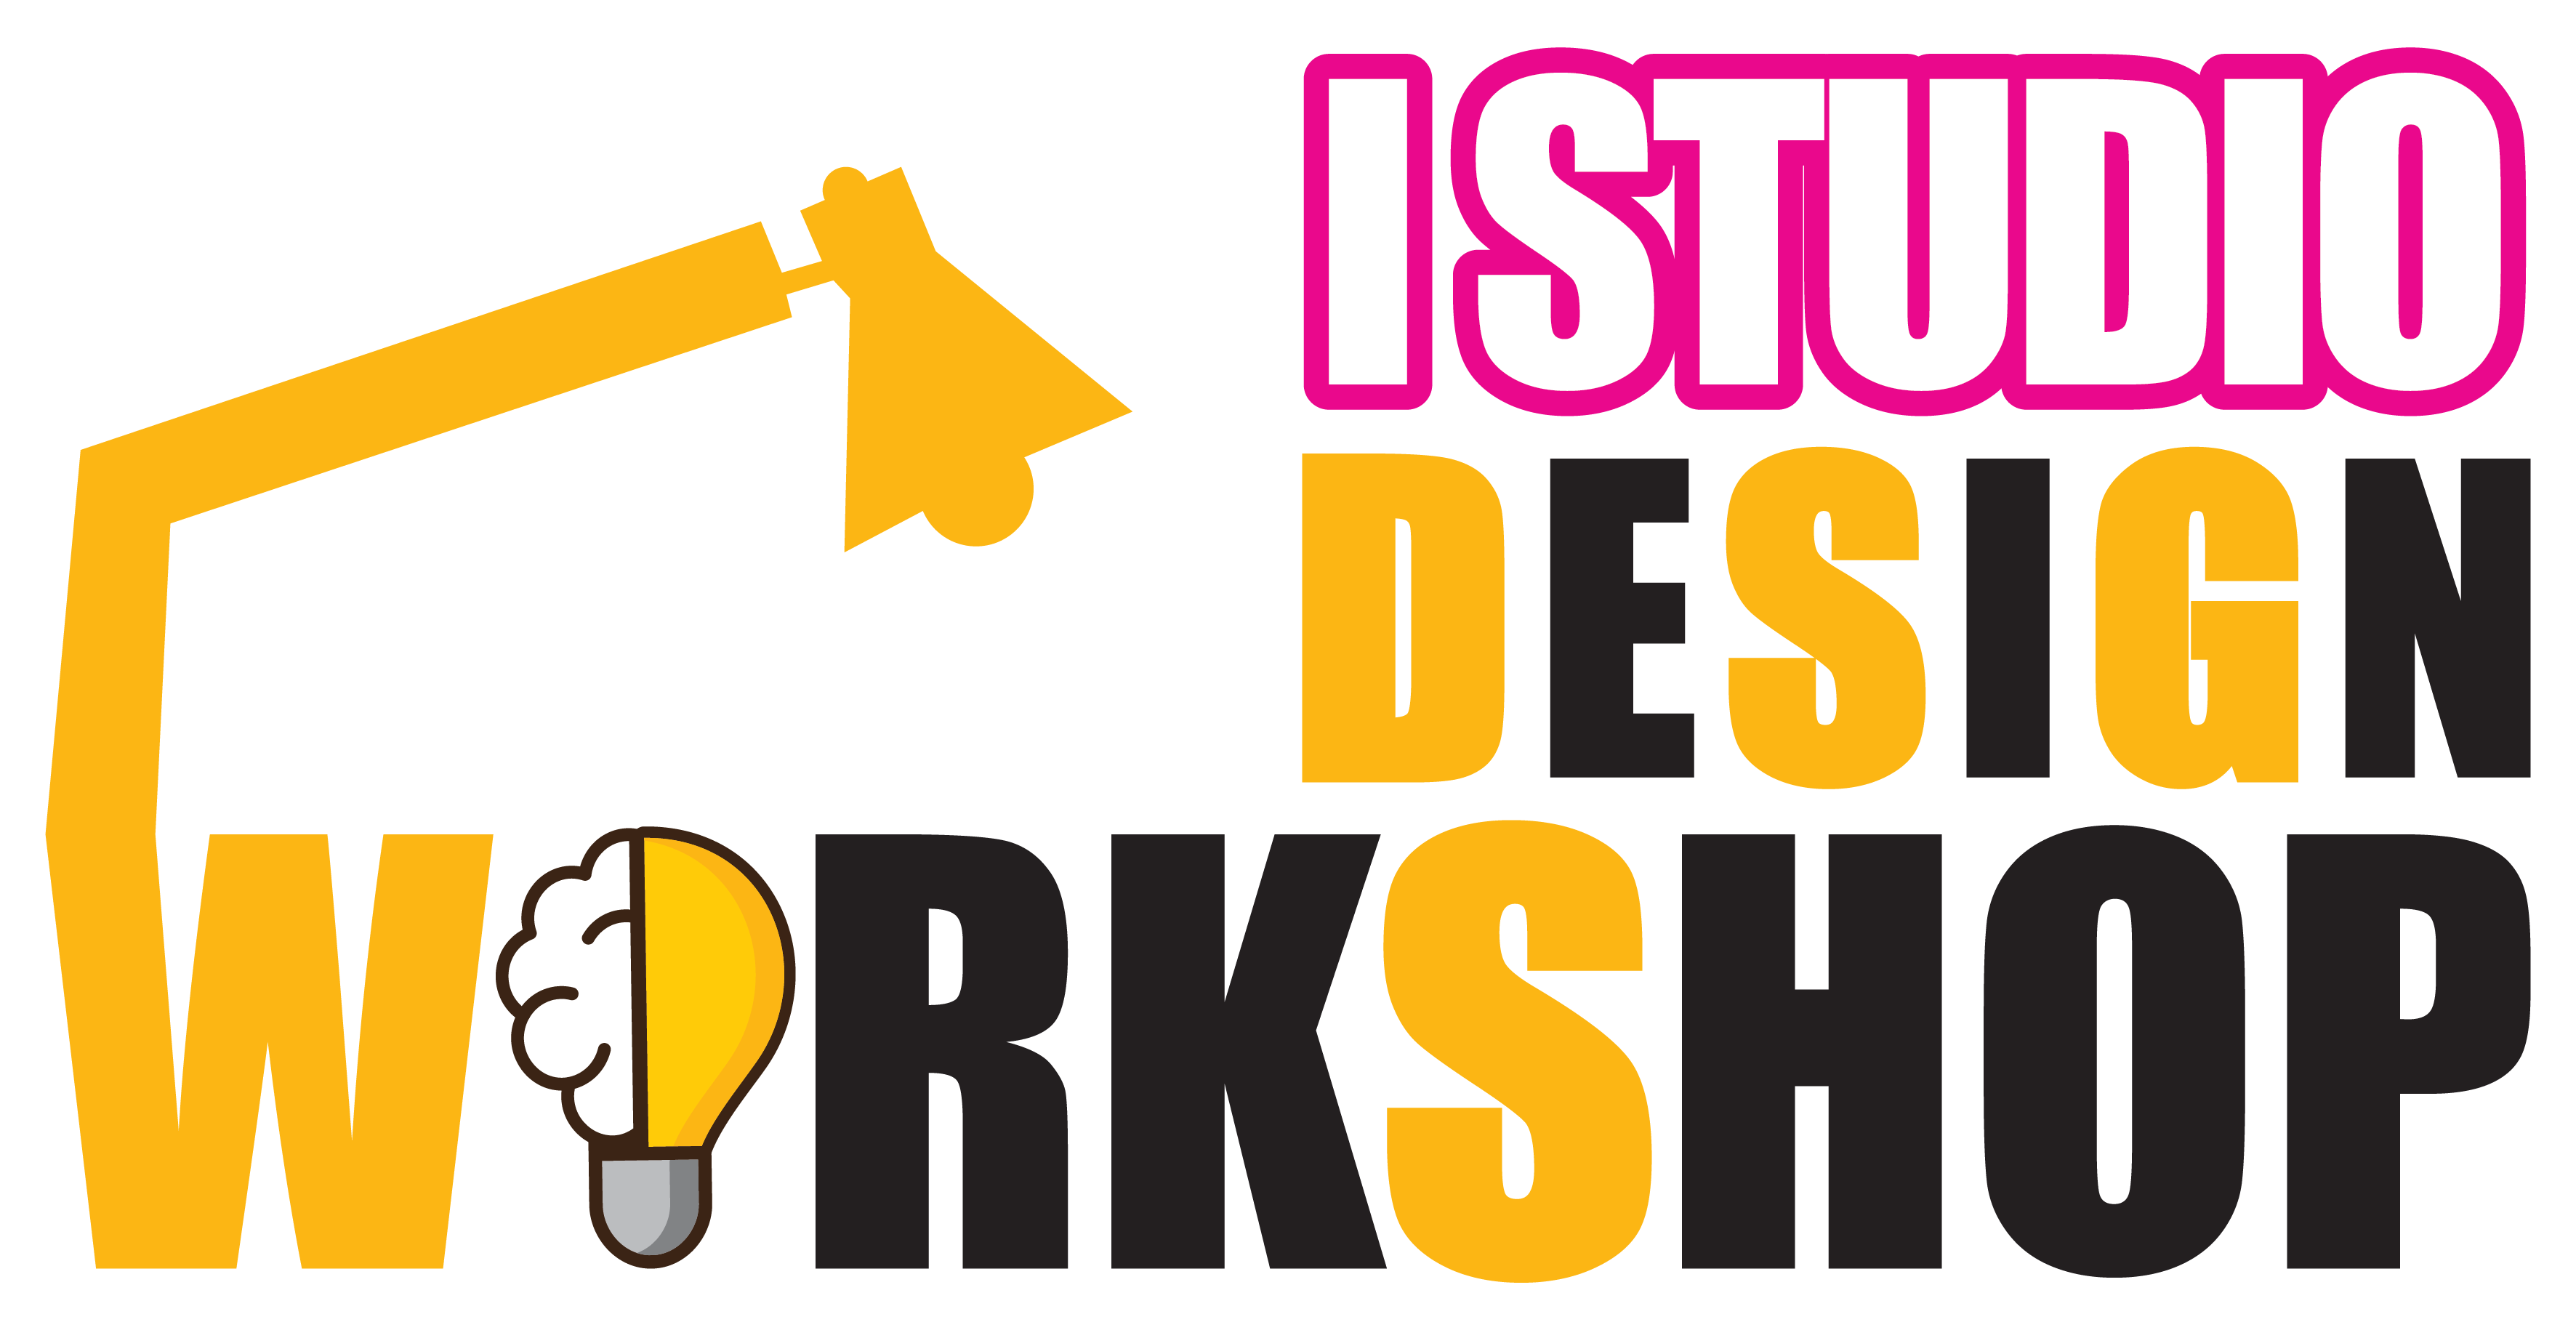 Istudio - Workshop Logo_convert - 4 MAY 22-01